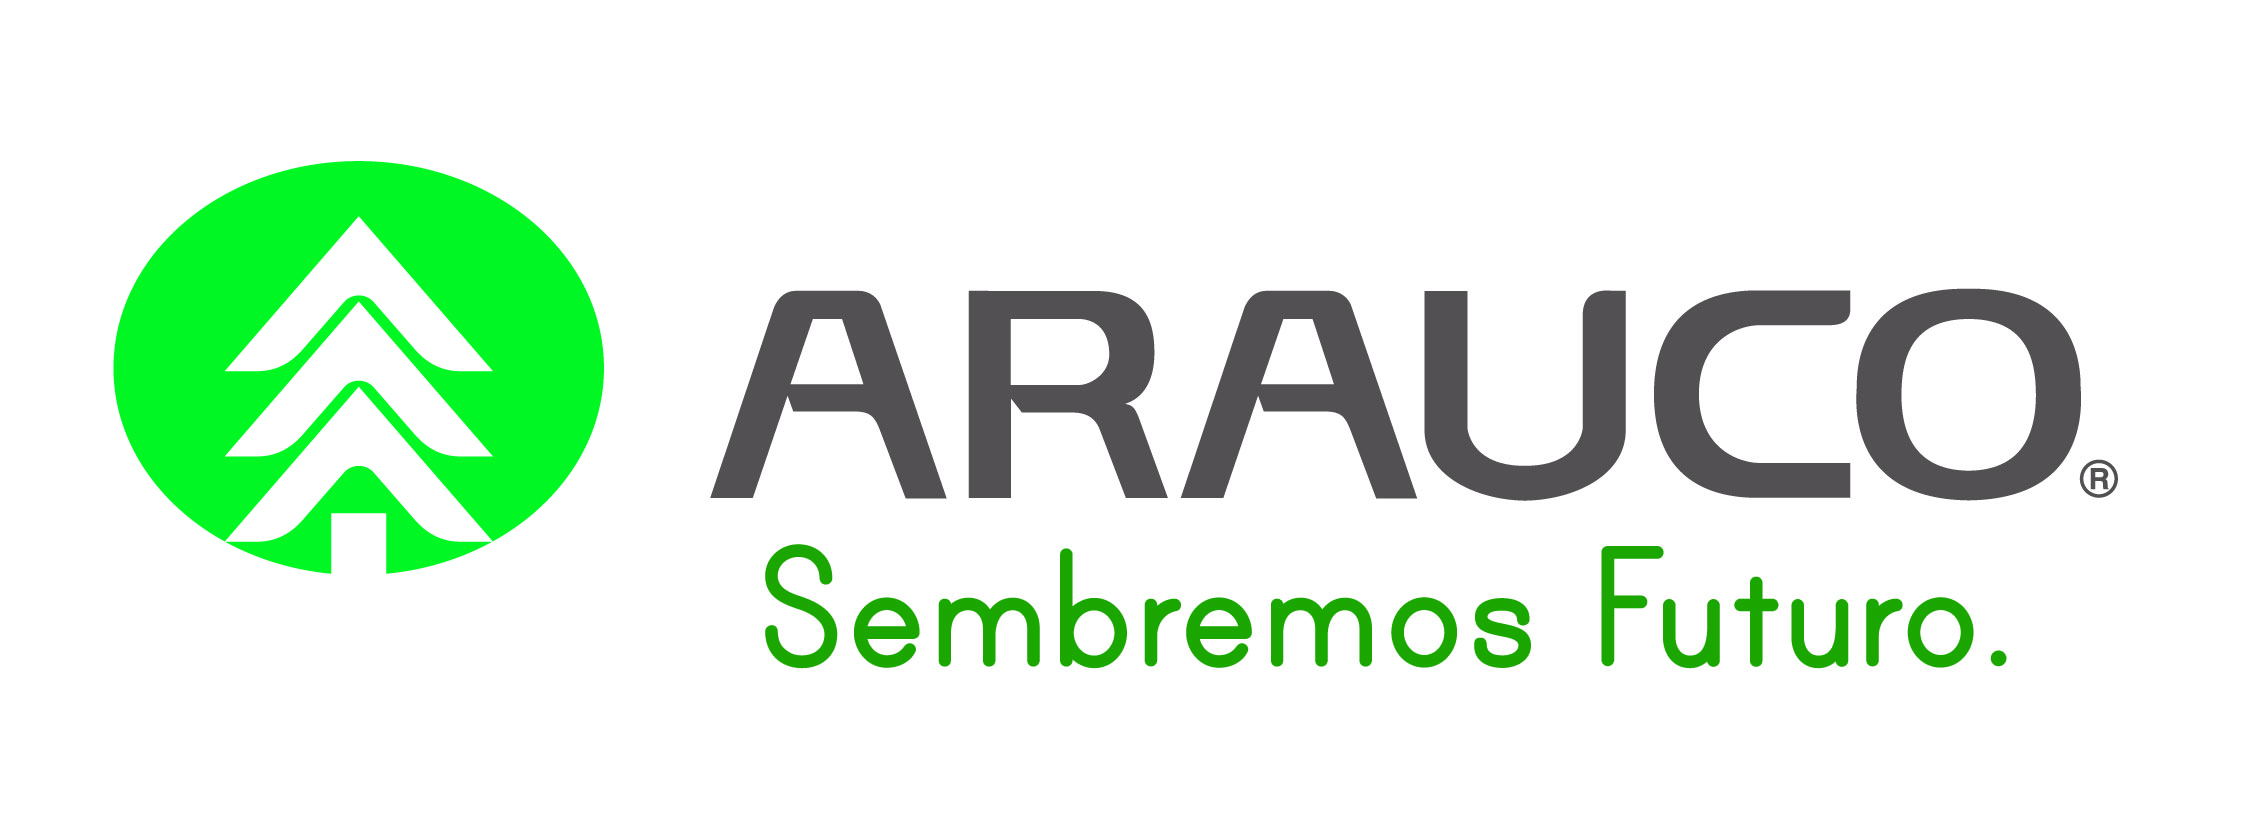 Logo-ARAUCO-Sembremos-Futuro.jpg